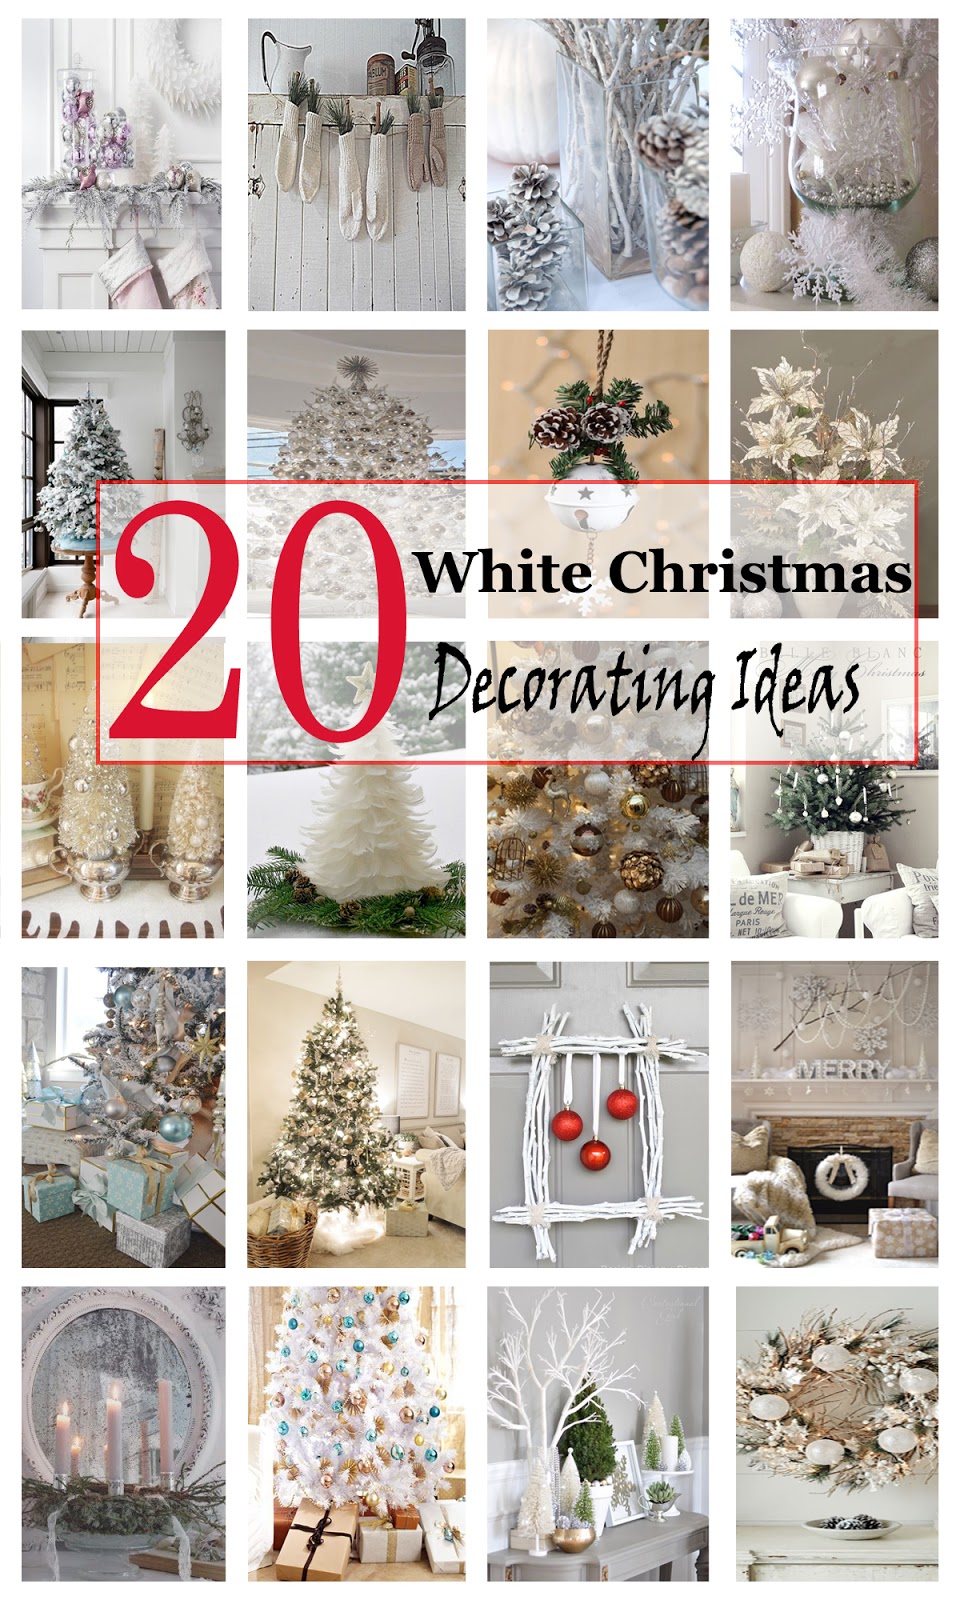 20 White Christmas Decorating Ideas - Holidays Blog For You